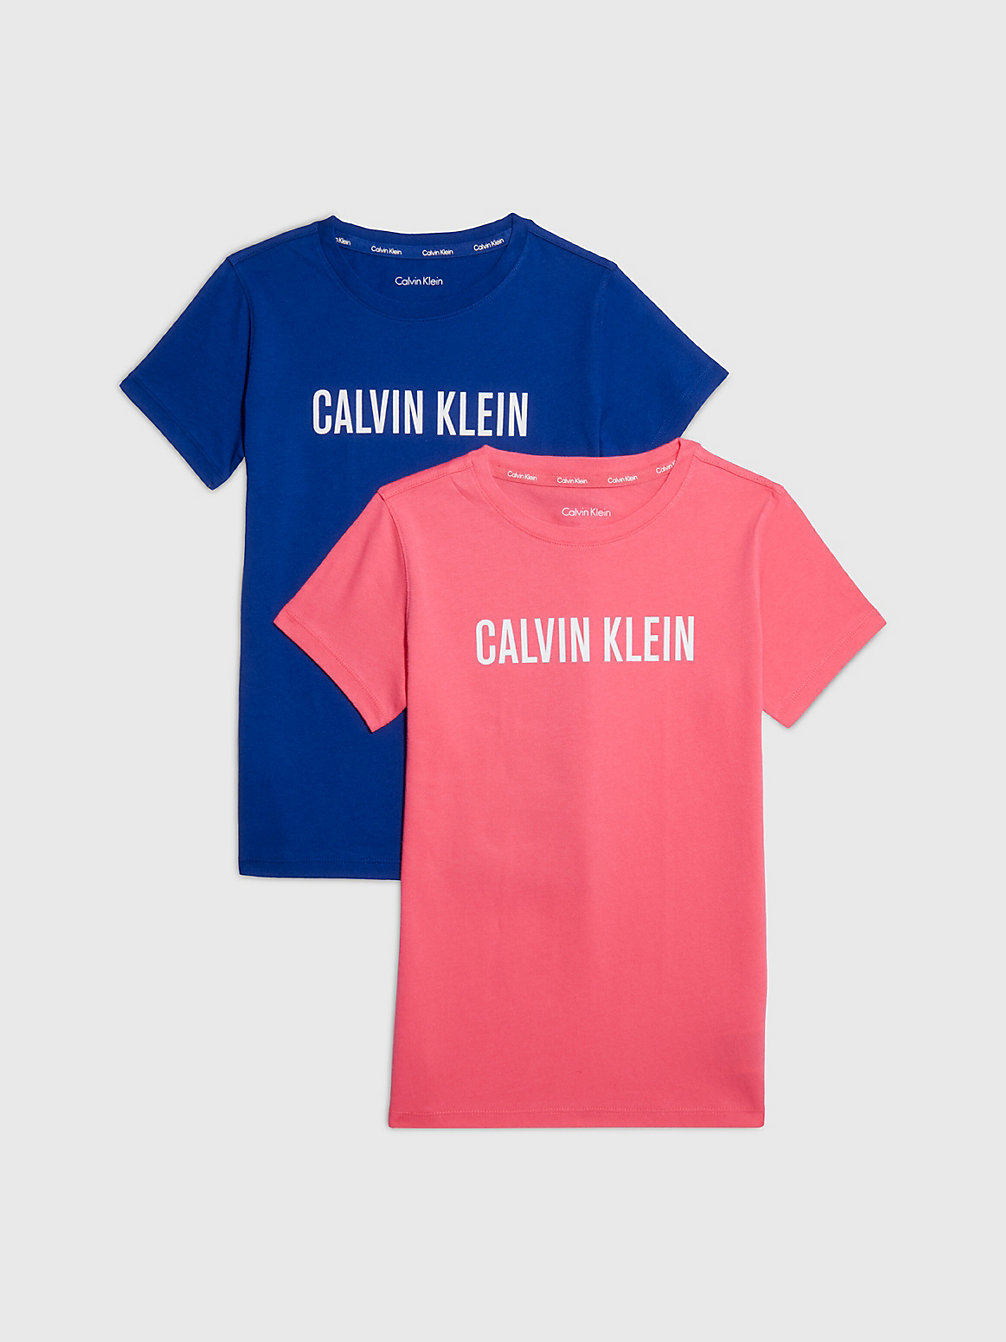 PINKFLASH/BOLDBLUE 2 Pack T-Shirts - Intense Power undefined girls Calvin Klein